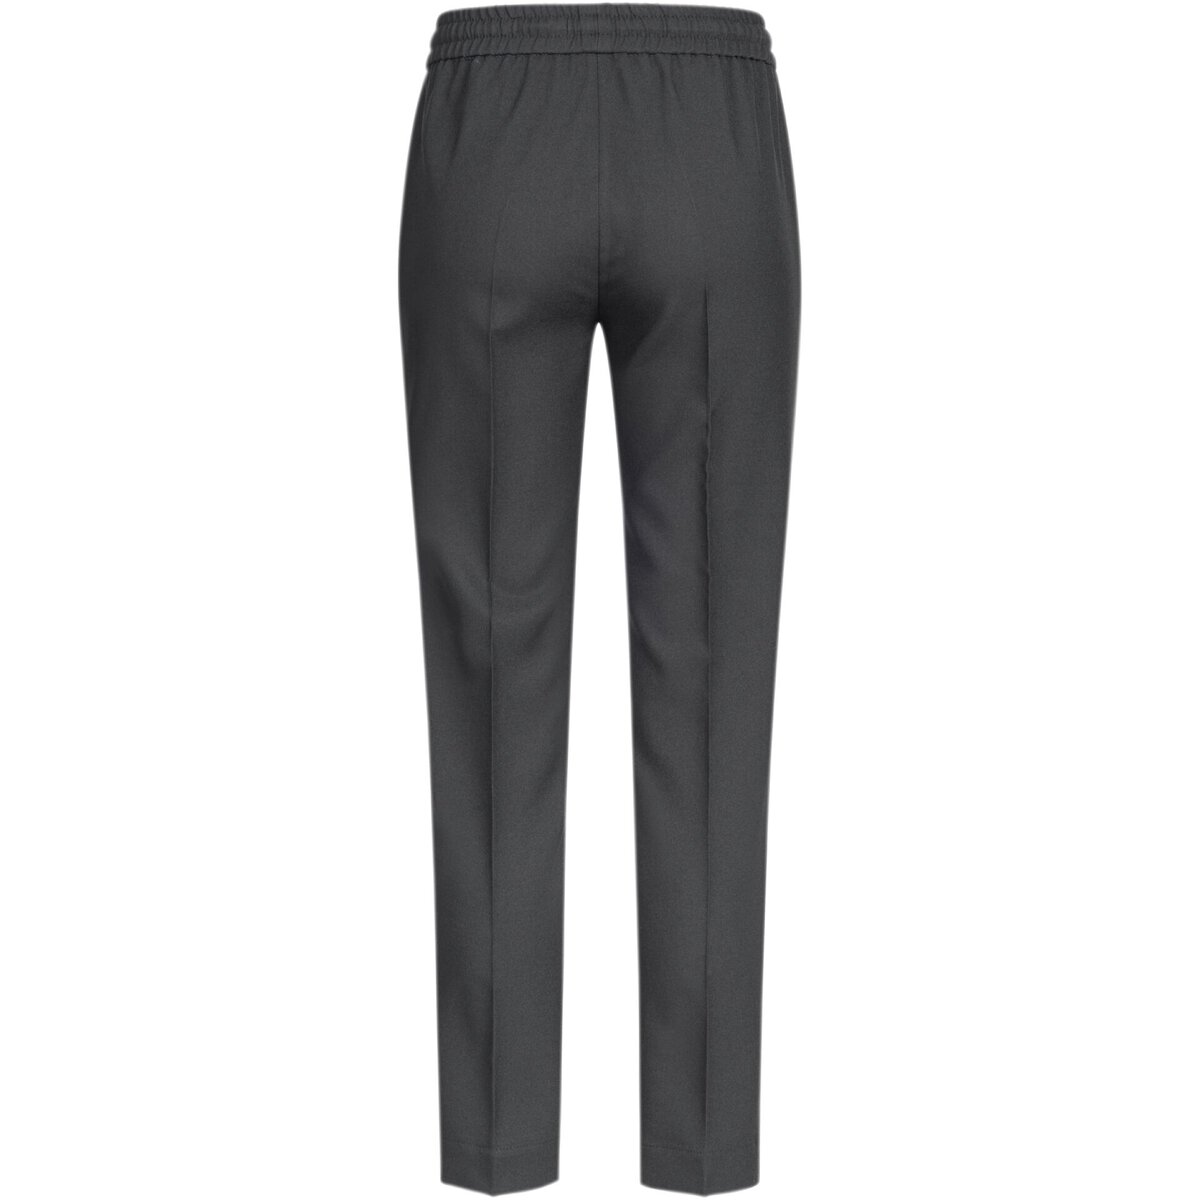 Damen-Hose "Joggpants" schwarz Größe 38 (1)